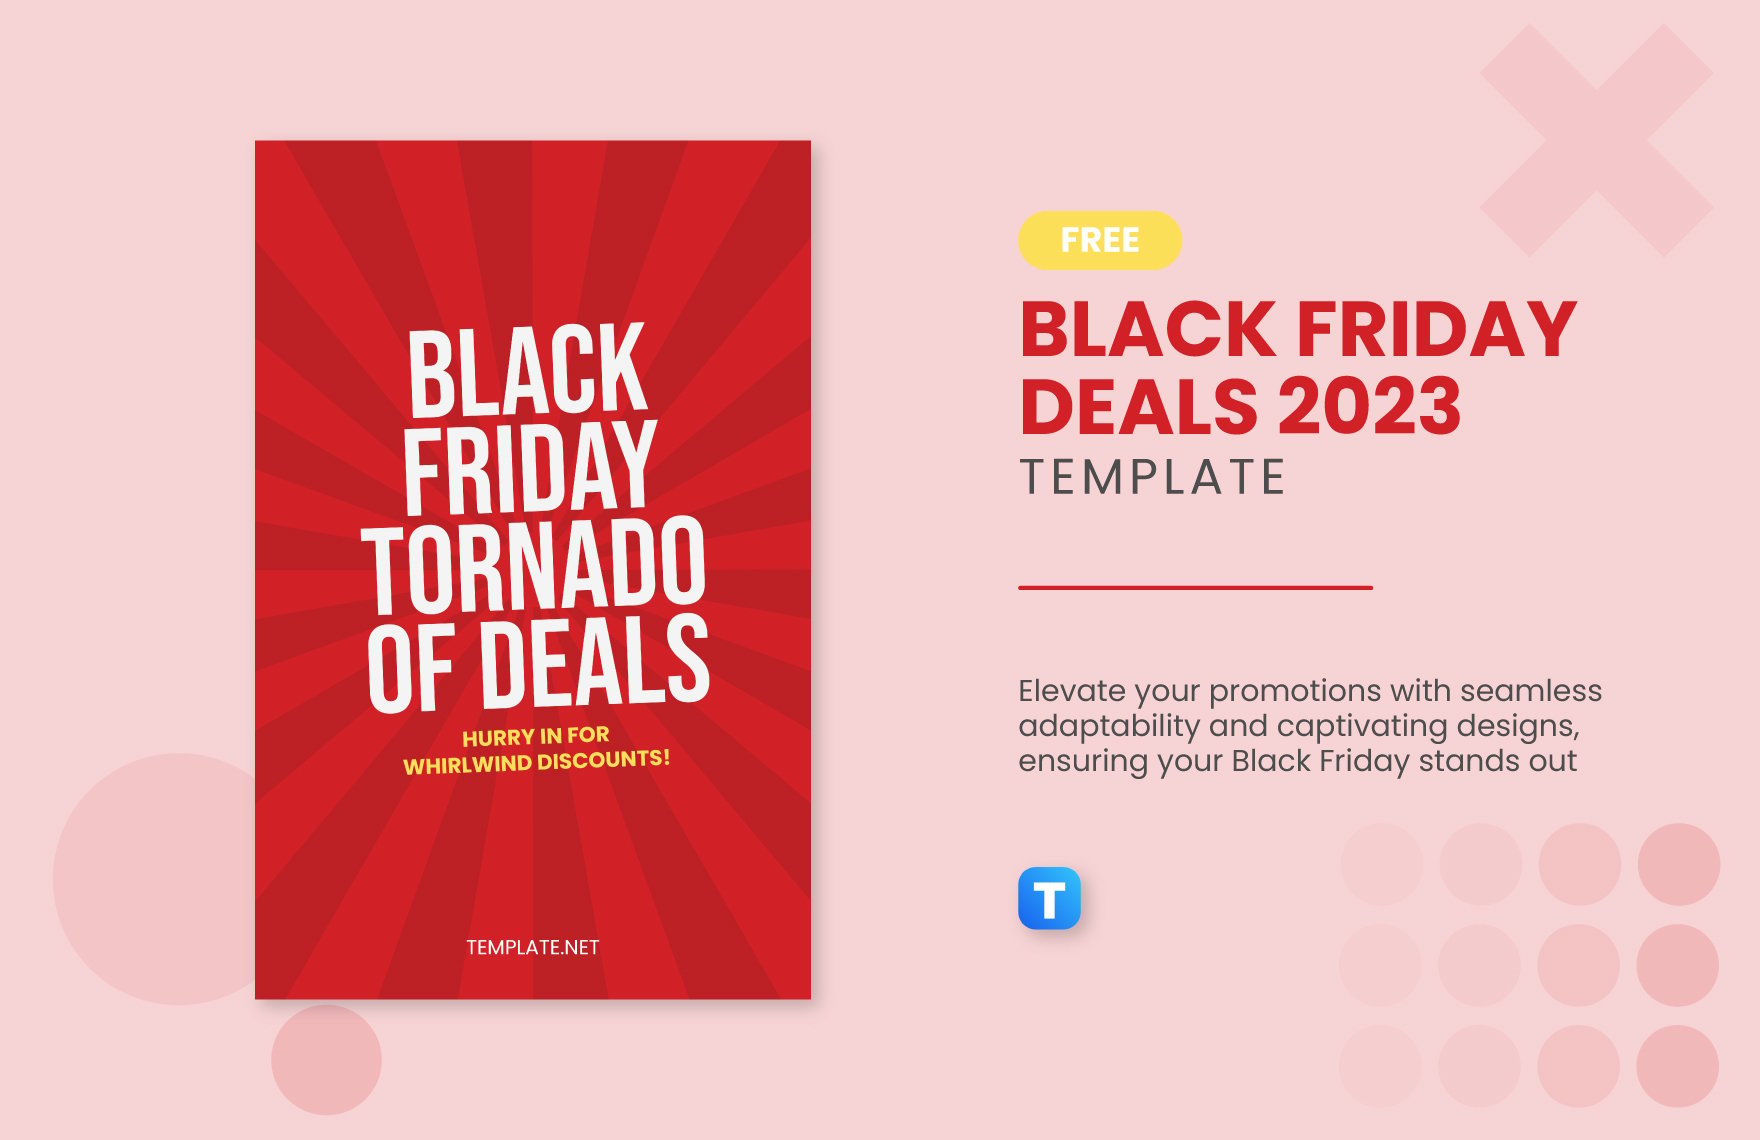 Black Friday Deals 2023 Template